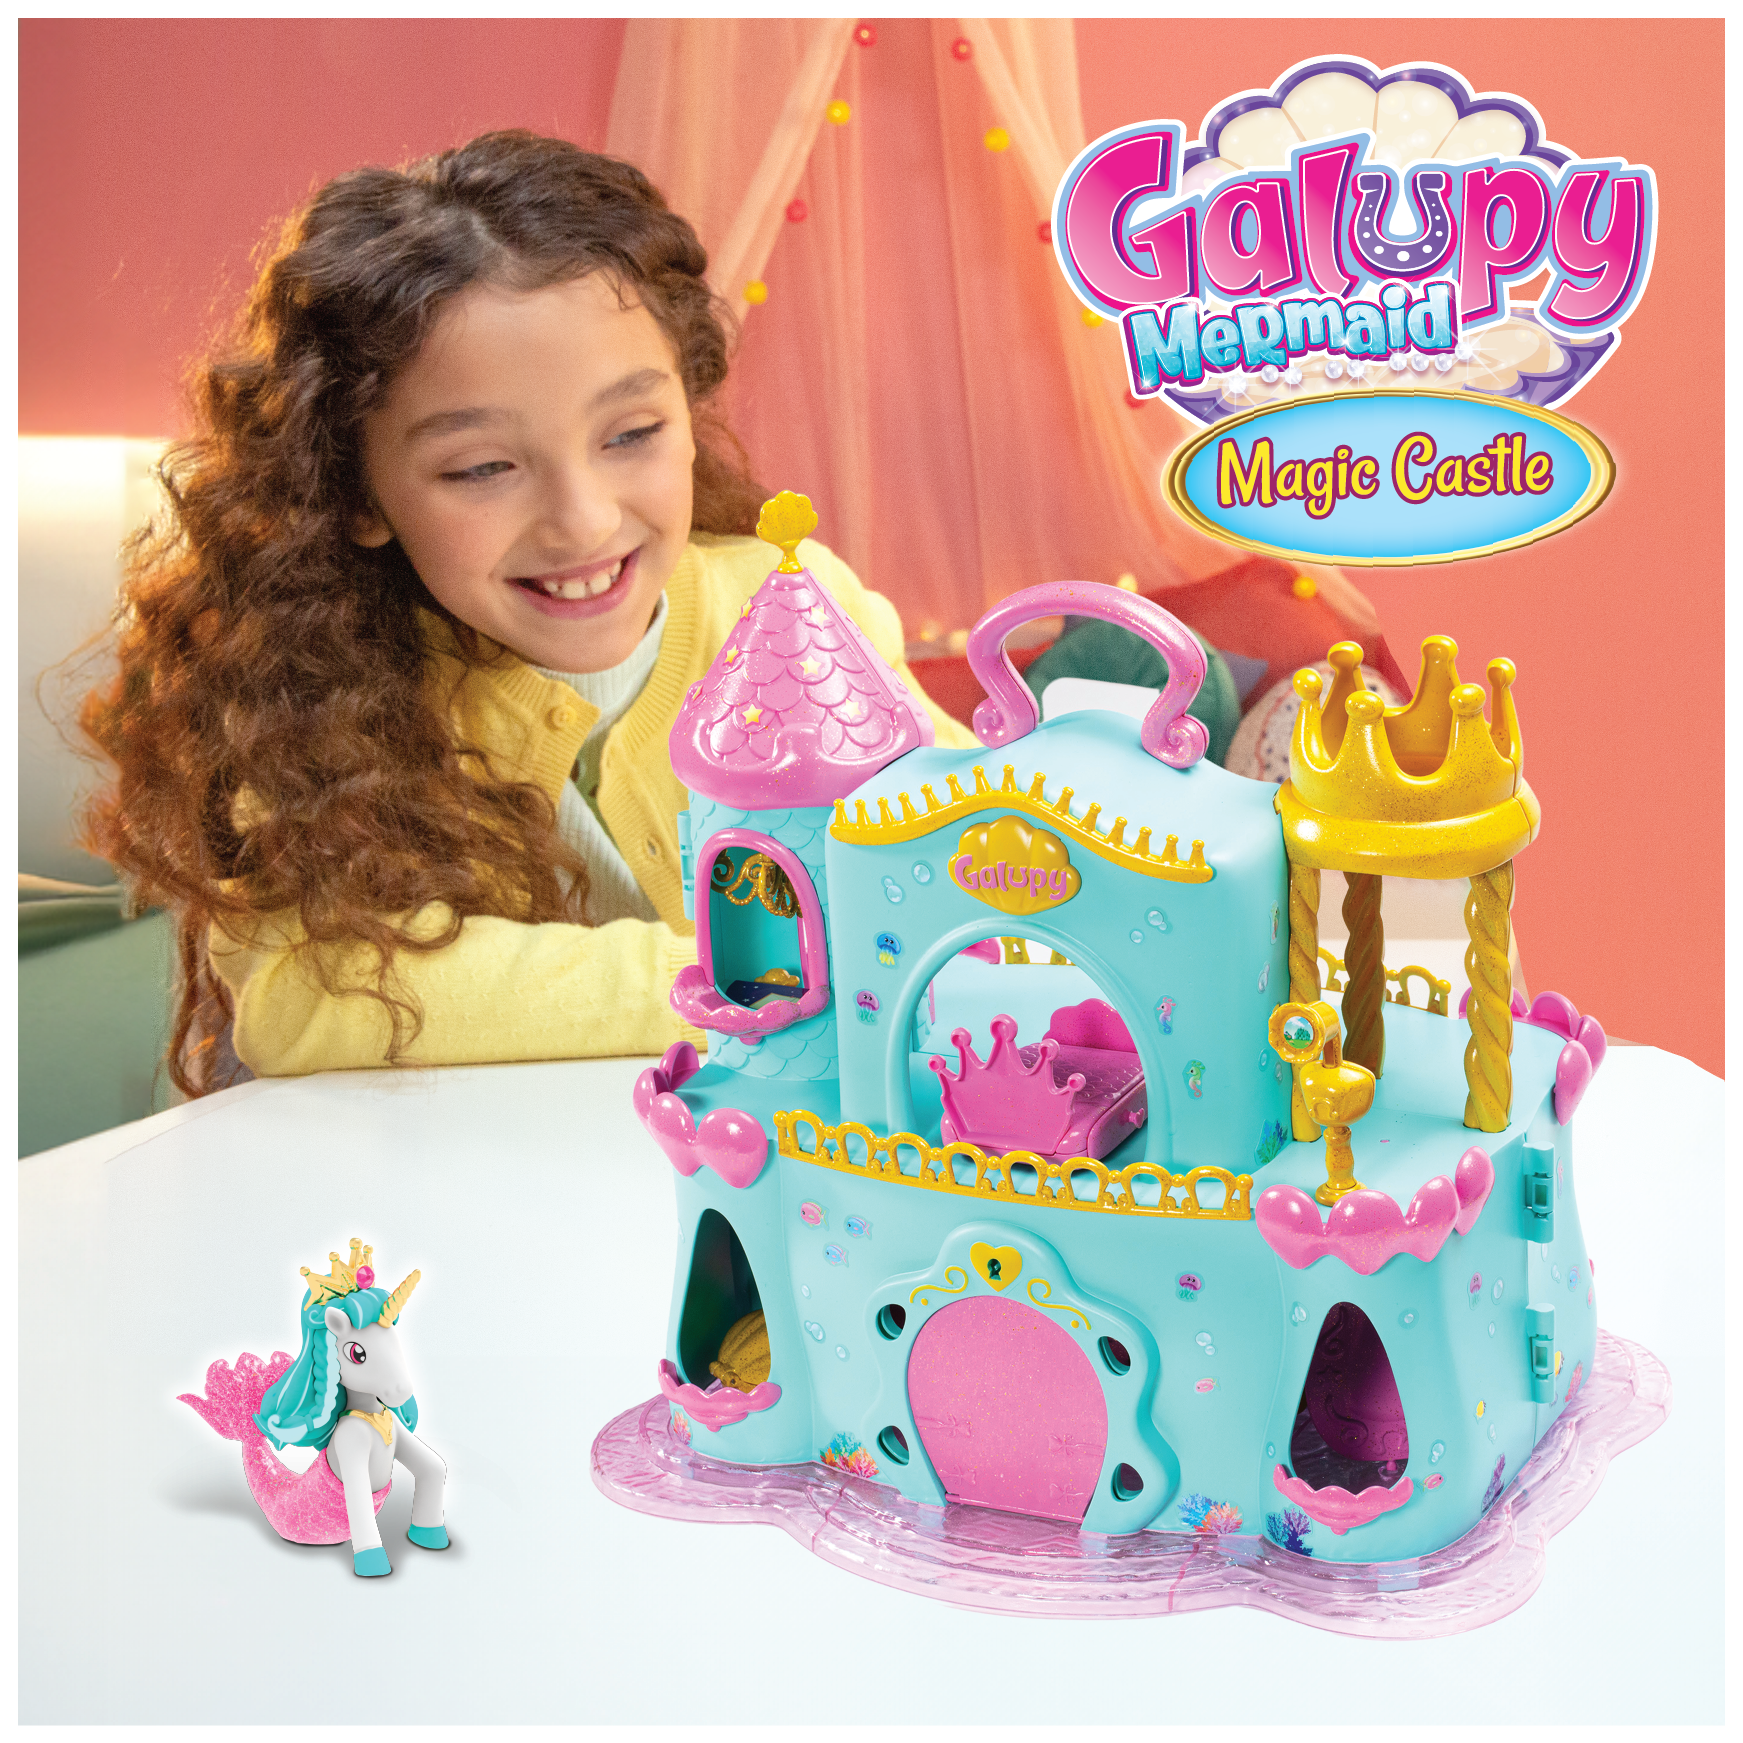 Jetzt erhältlich – Das große Galupy-Zauberschloss Magic Castle!